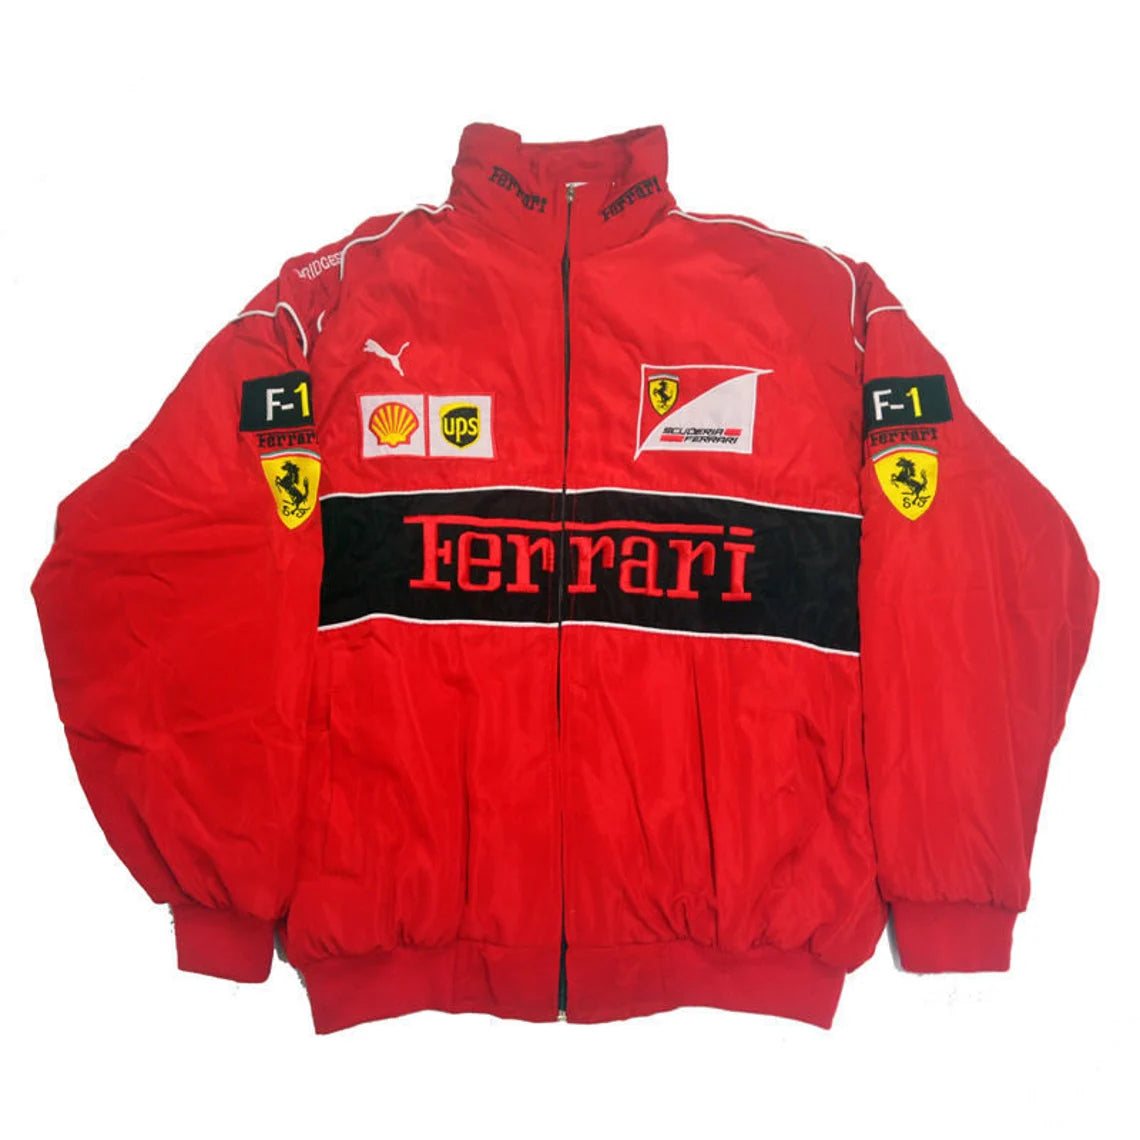 Retro Jacket Racing F1 FERRARI Vintage Red